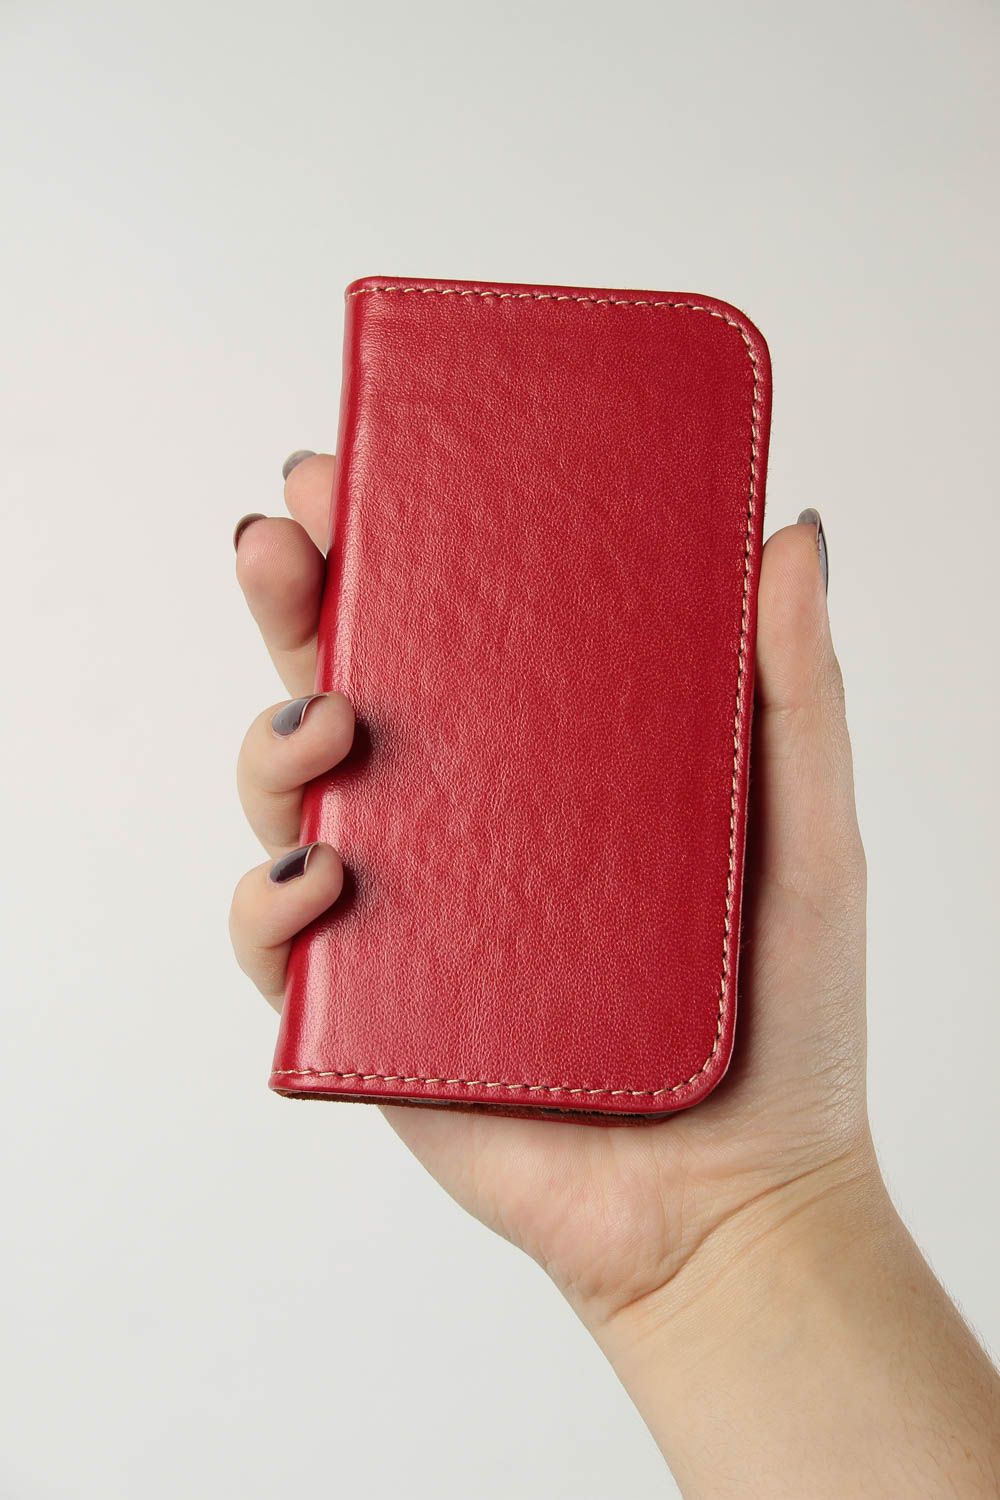 Tablet Hülle Smartphone Tasche handmade iPad Hülle Leder Tablet Tasche rot schön foto 1